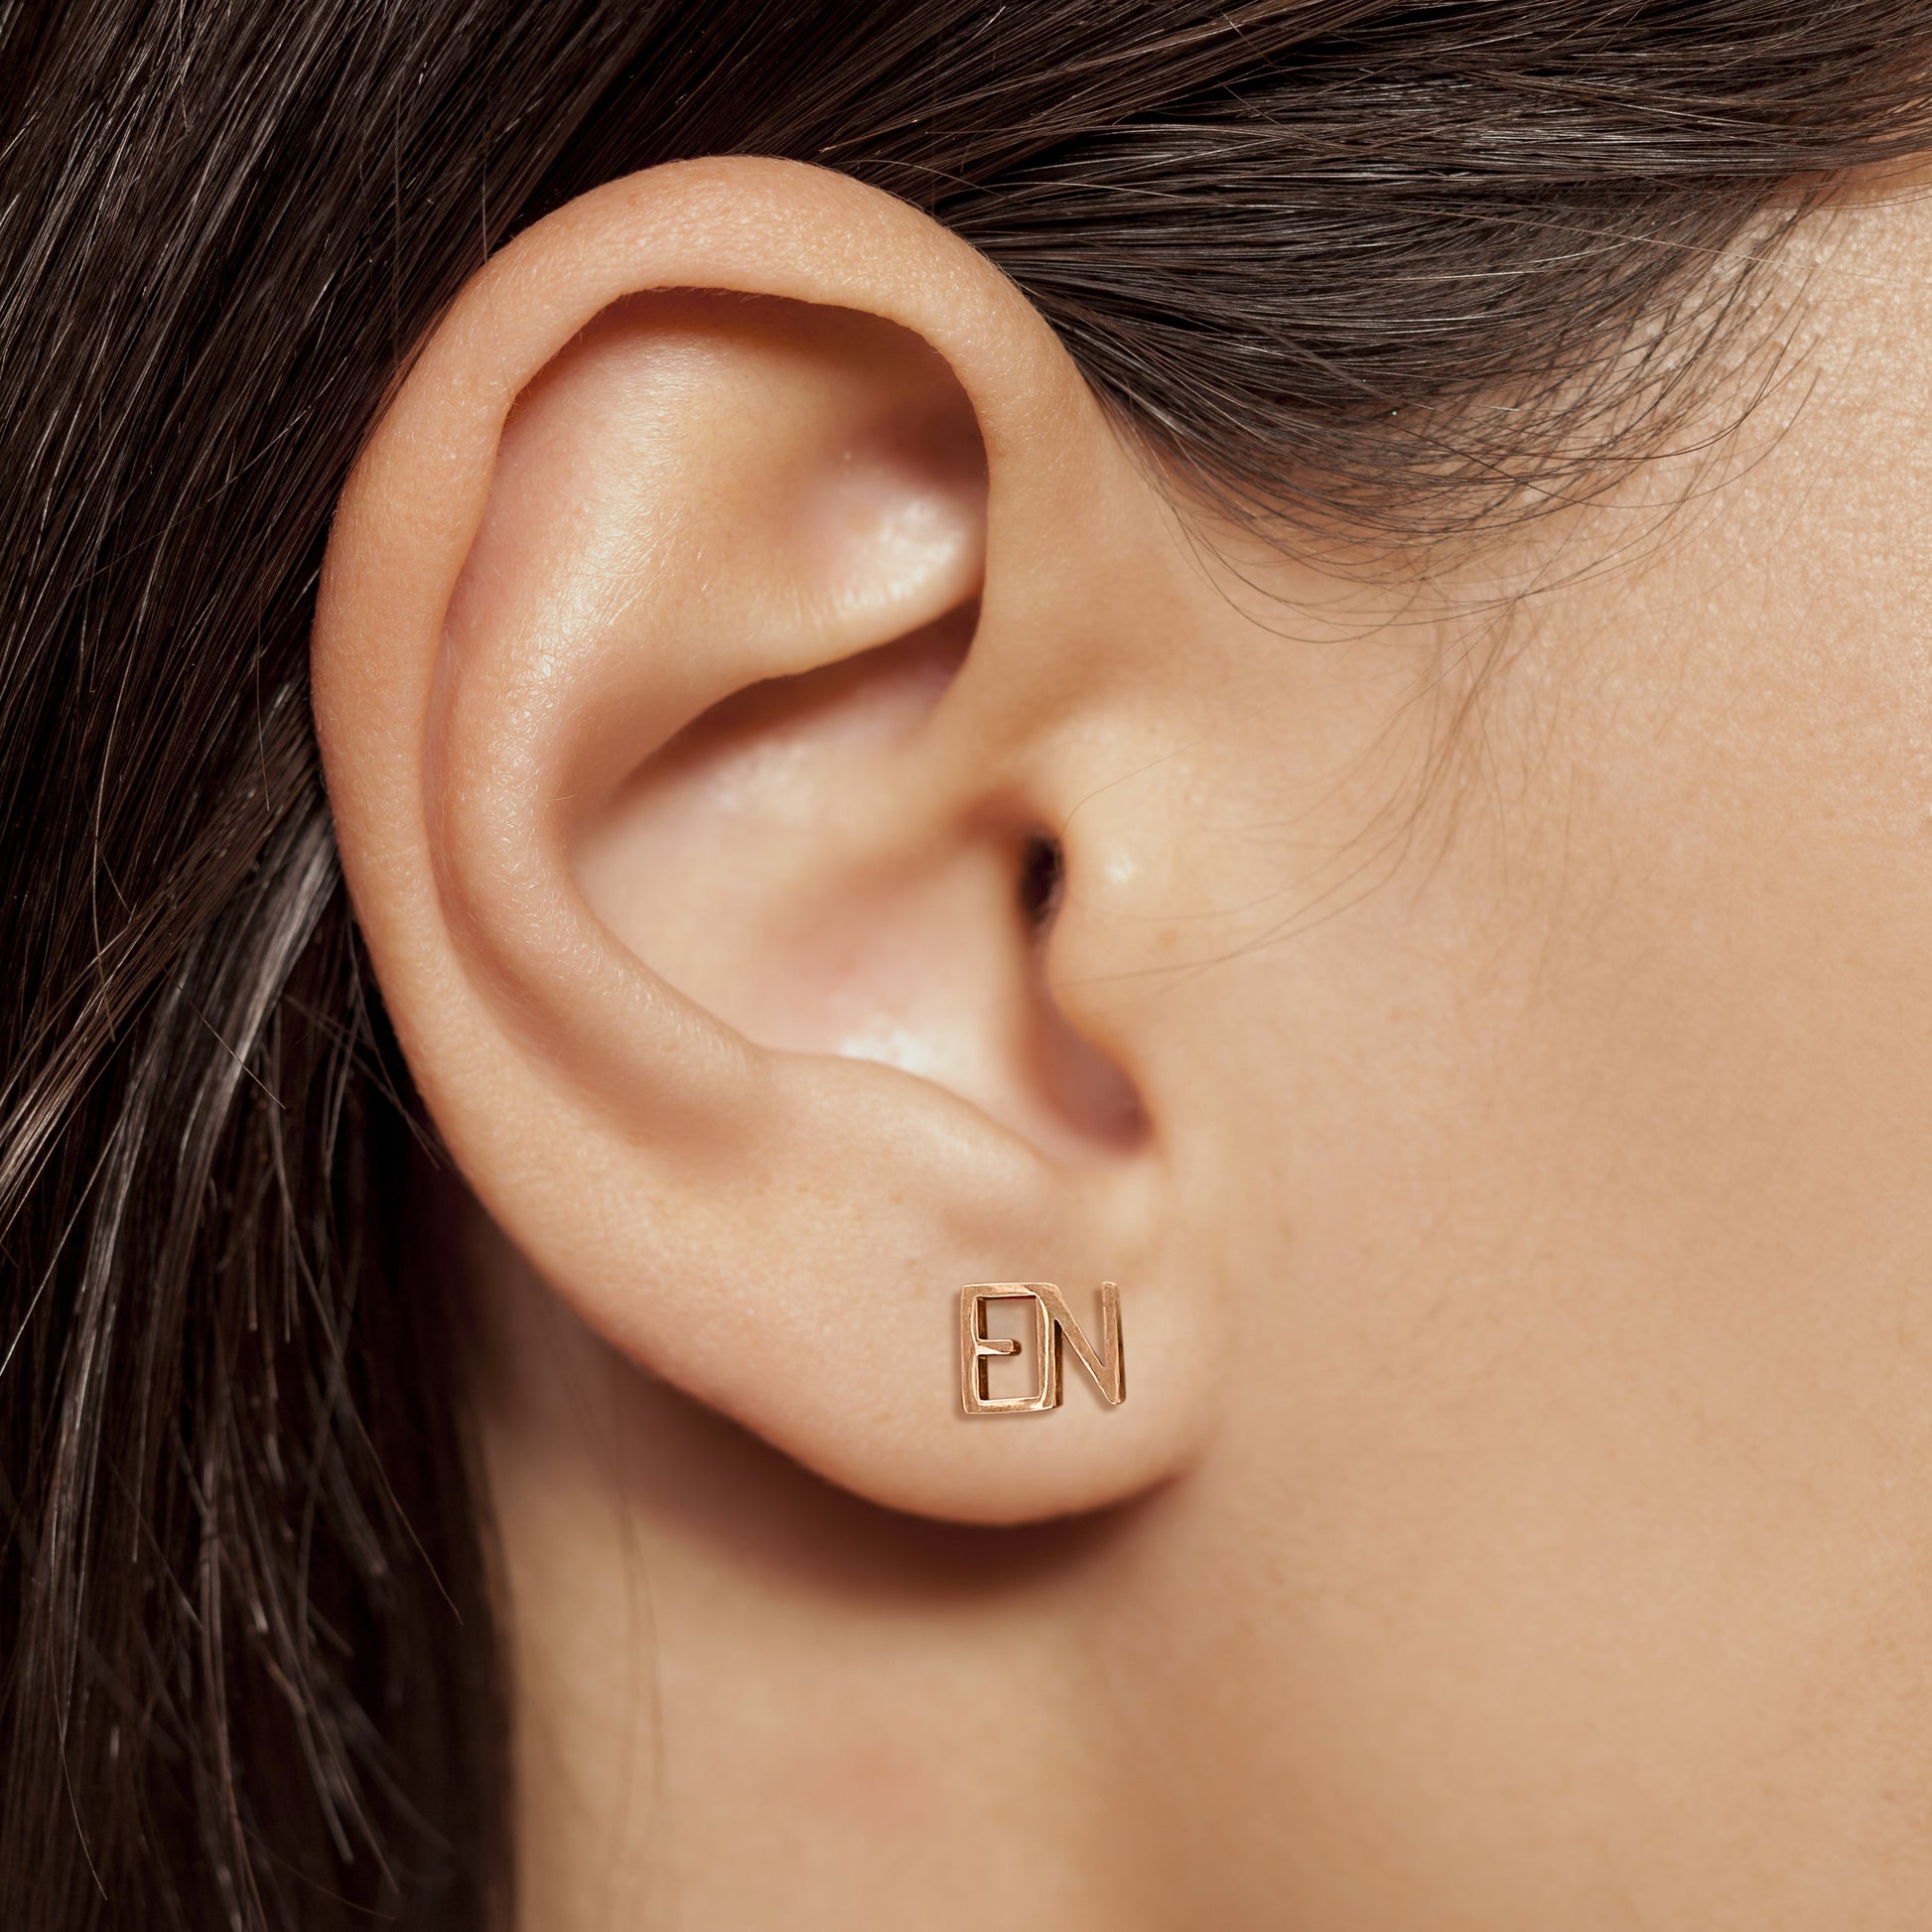 EN Earrings for nurses in rose gold